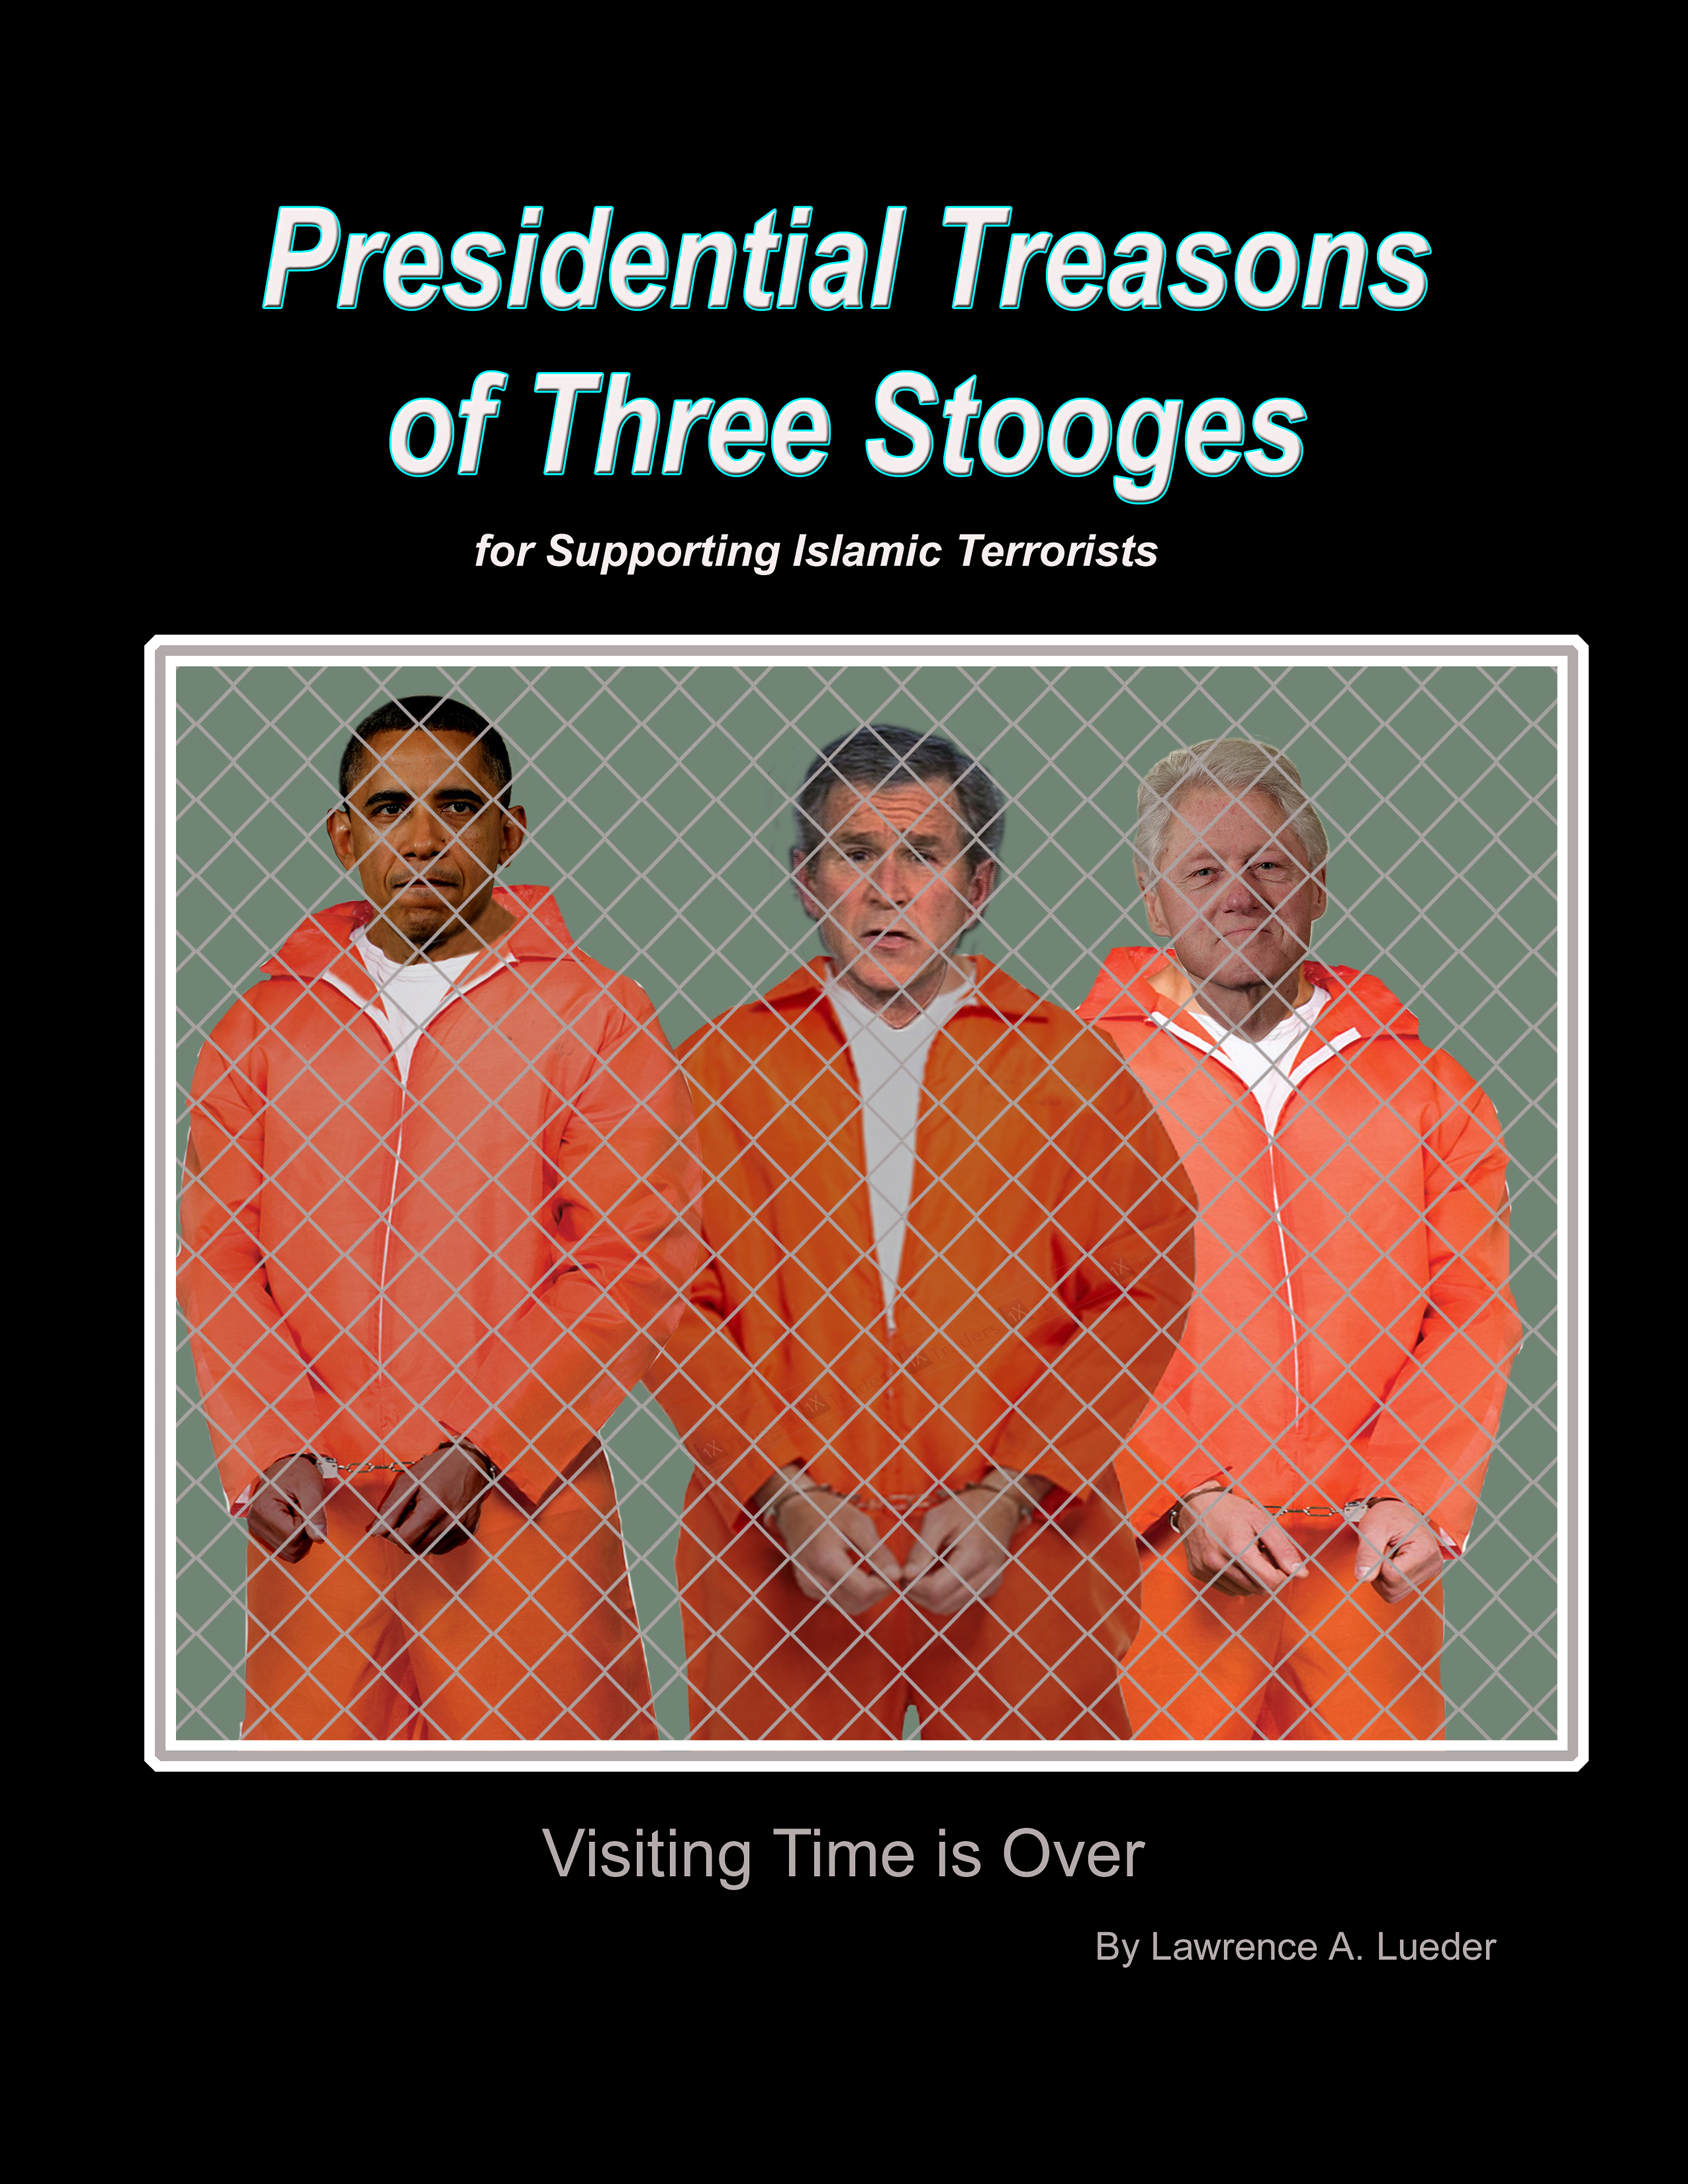 Presidentail Treason of Three Stooges